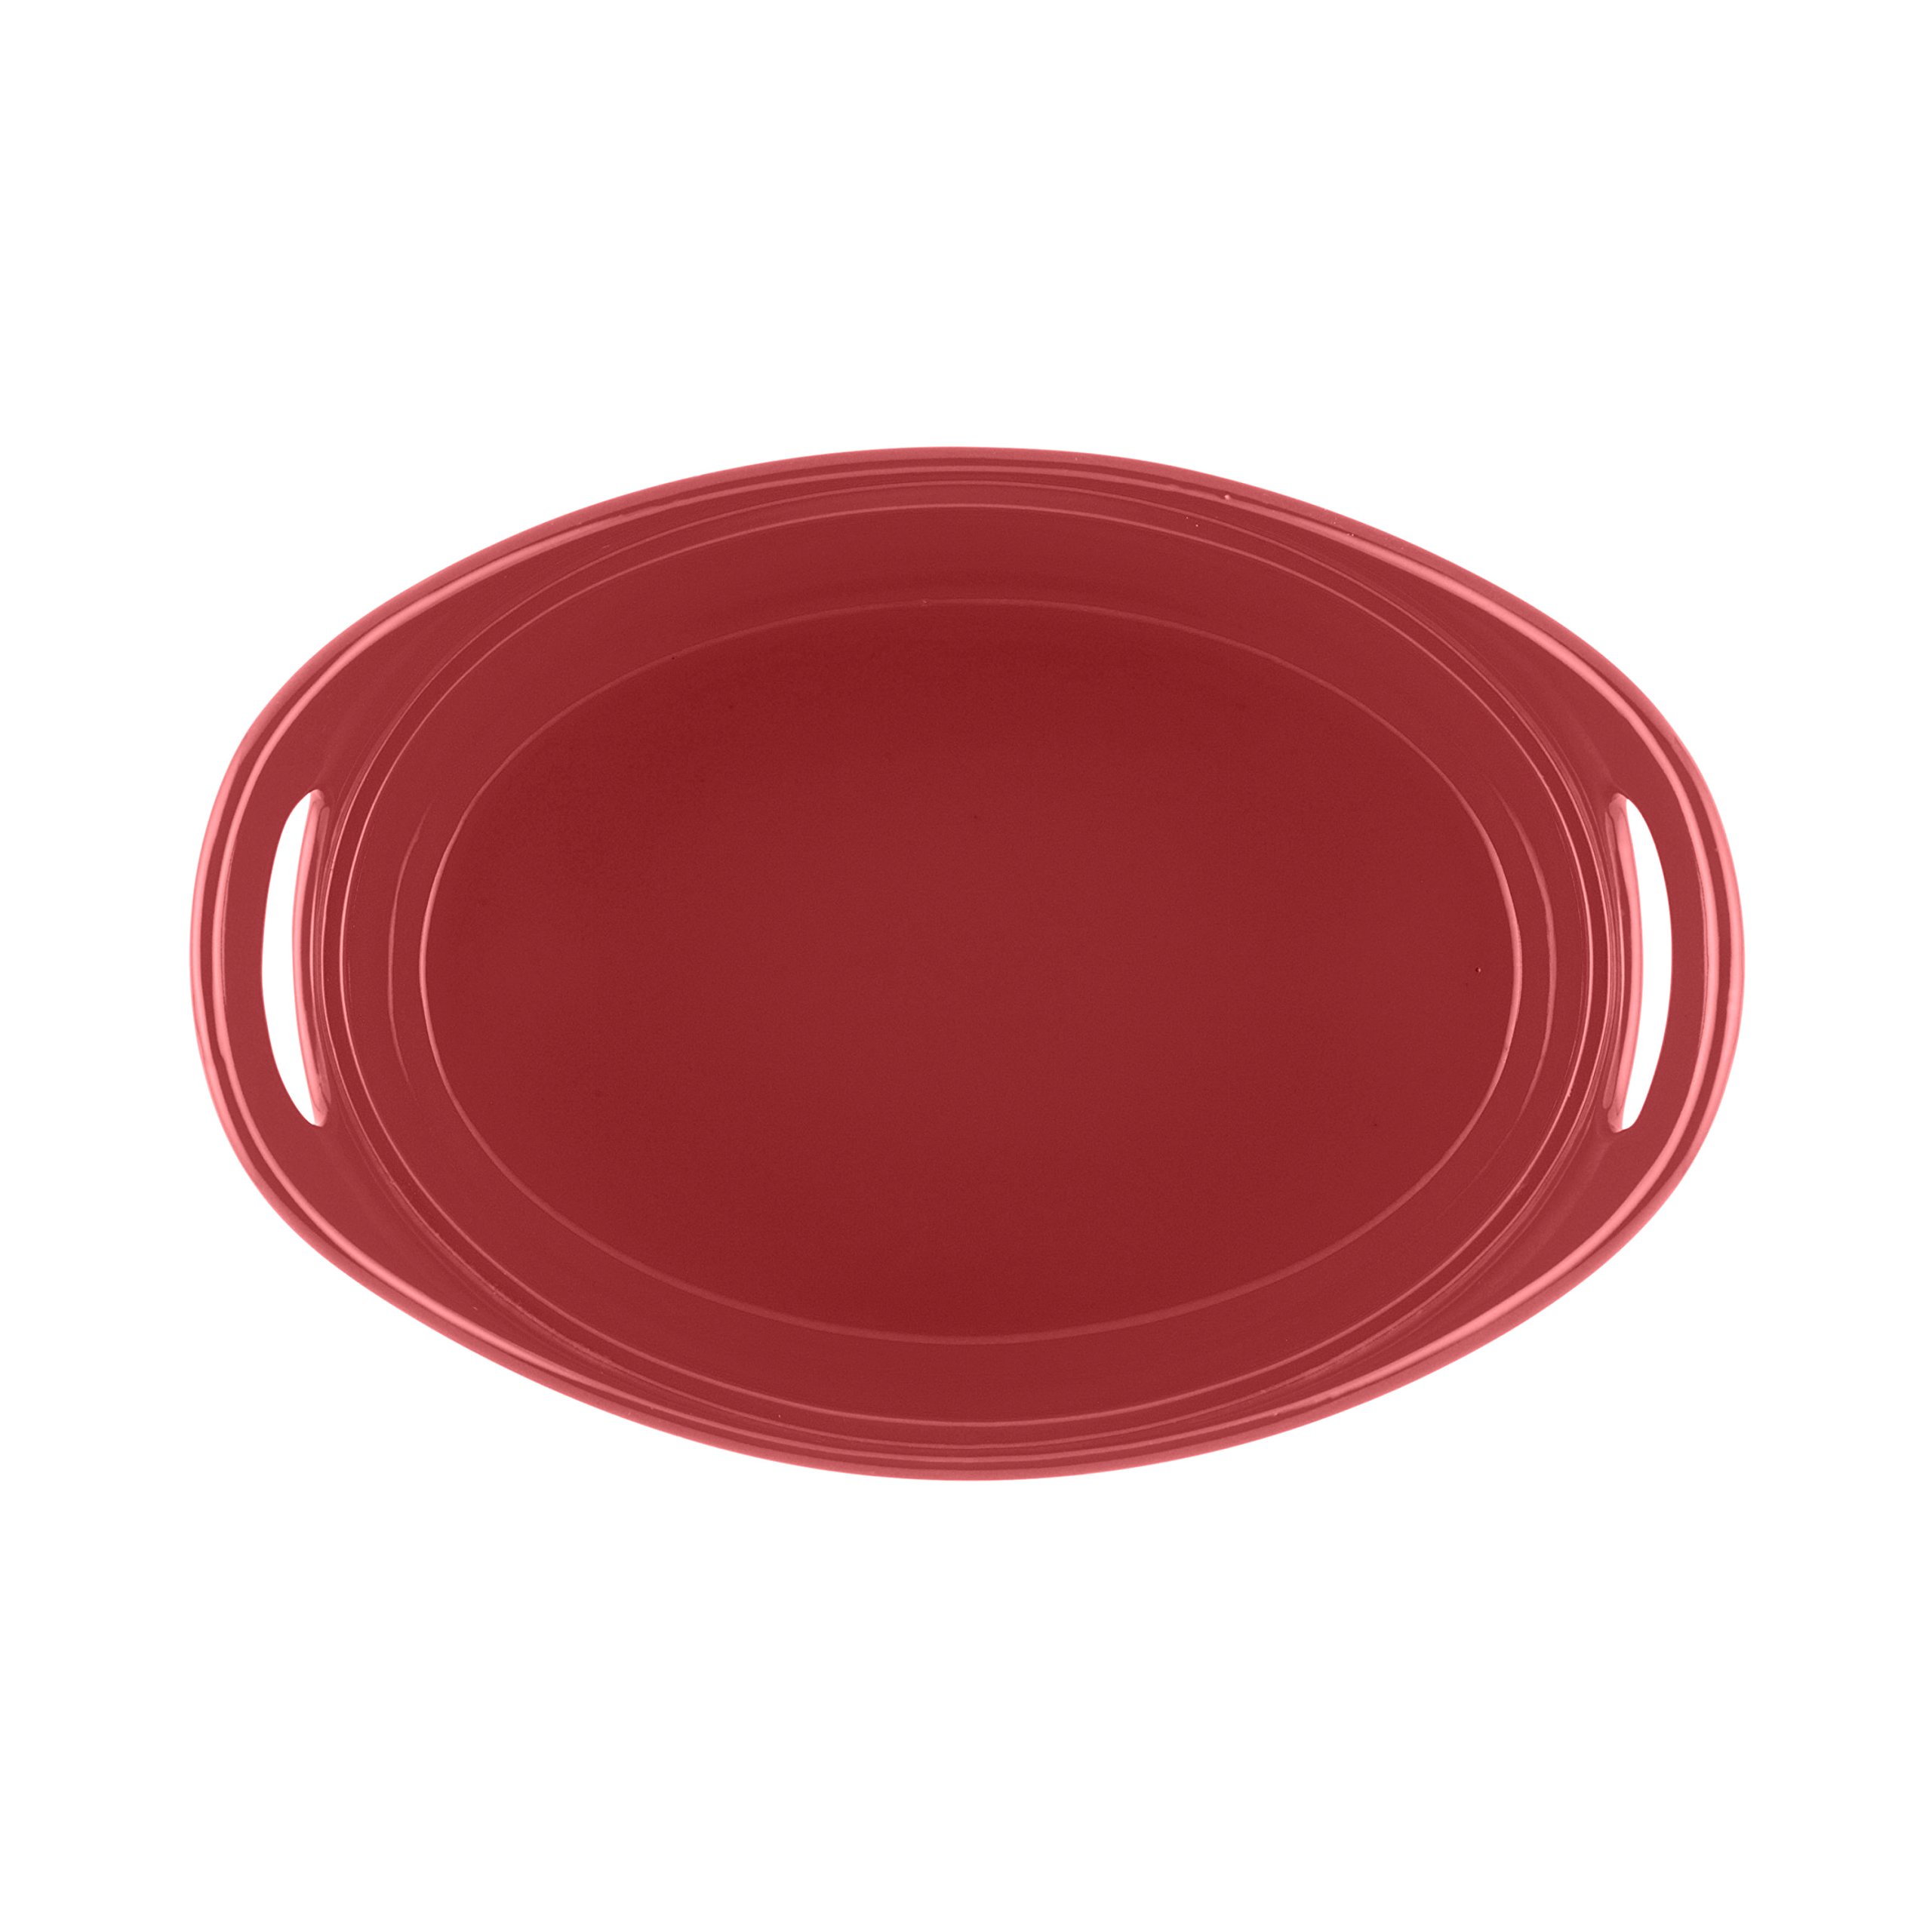 Rachael Ray Solid Glaze Ceramics Bakeware/Baking Pan Set - 2 Piece, Red